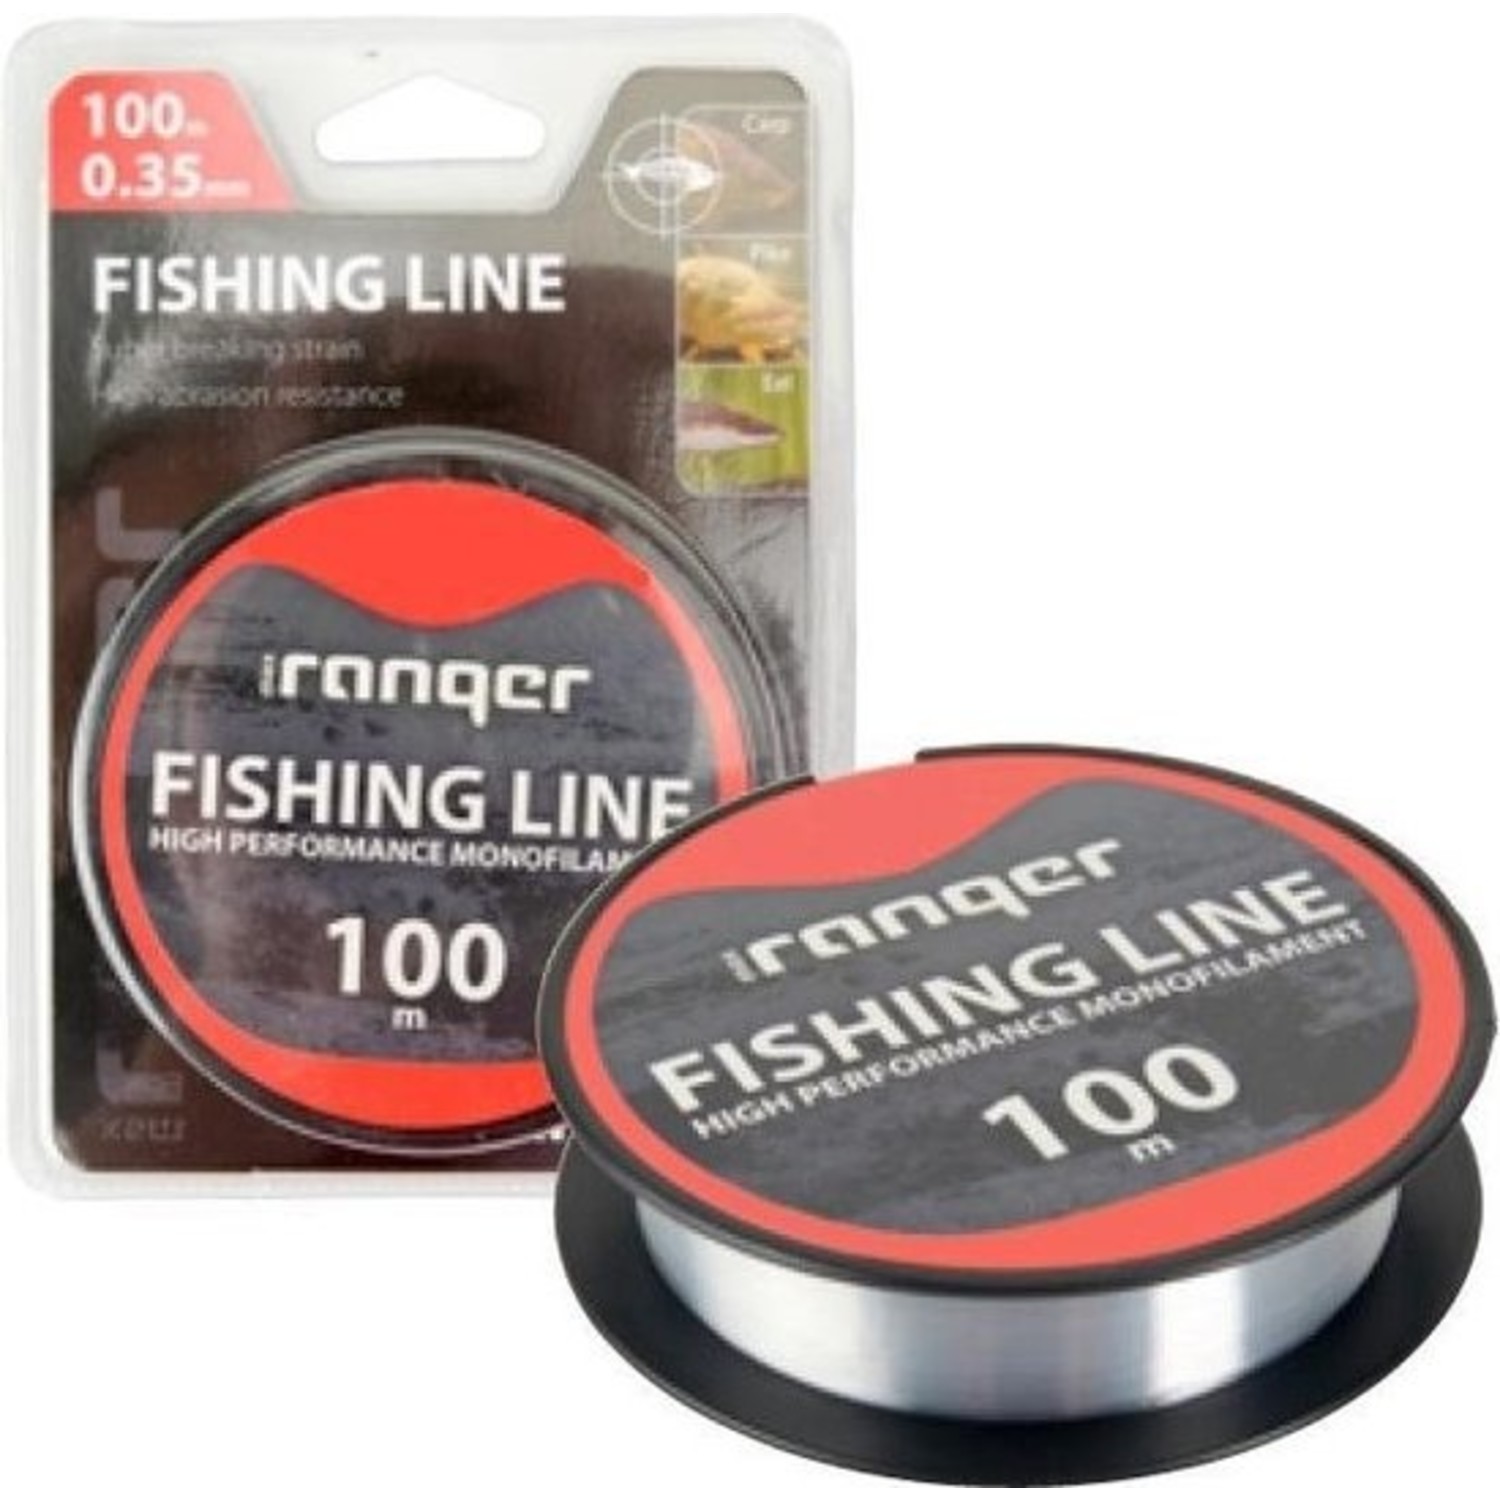 Fishing Line - Fishing Line Clear - Fishing Line - Nylon - 0.25 mm 